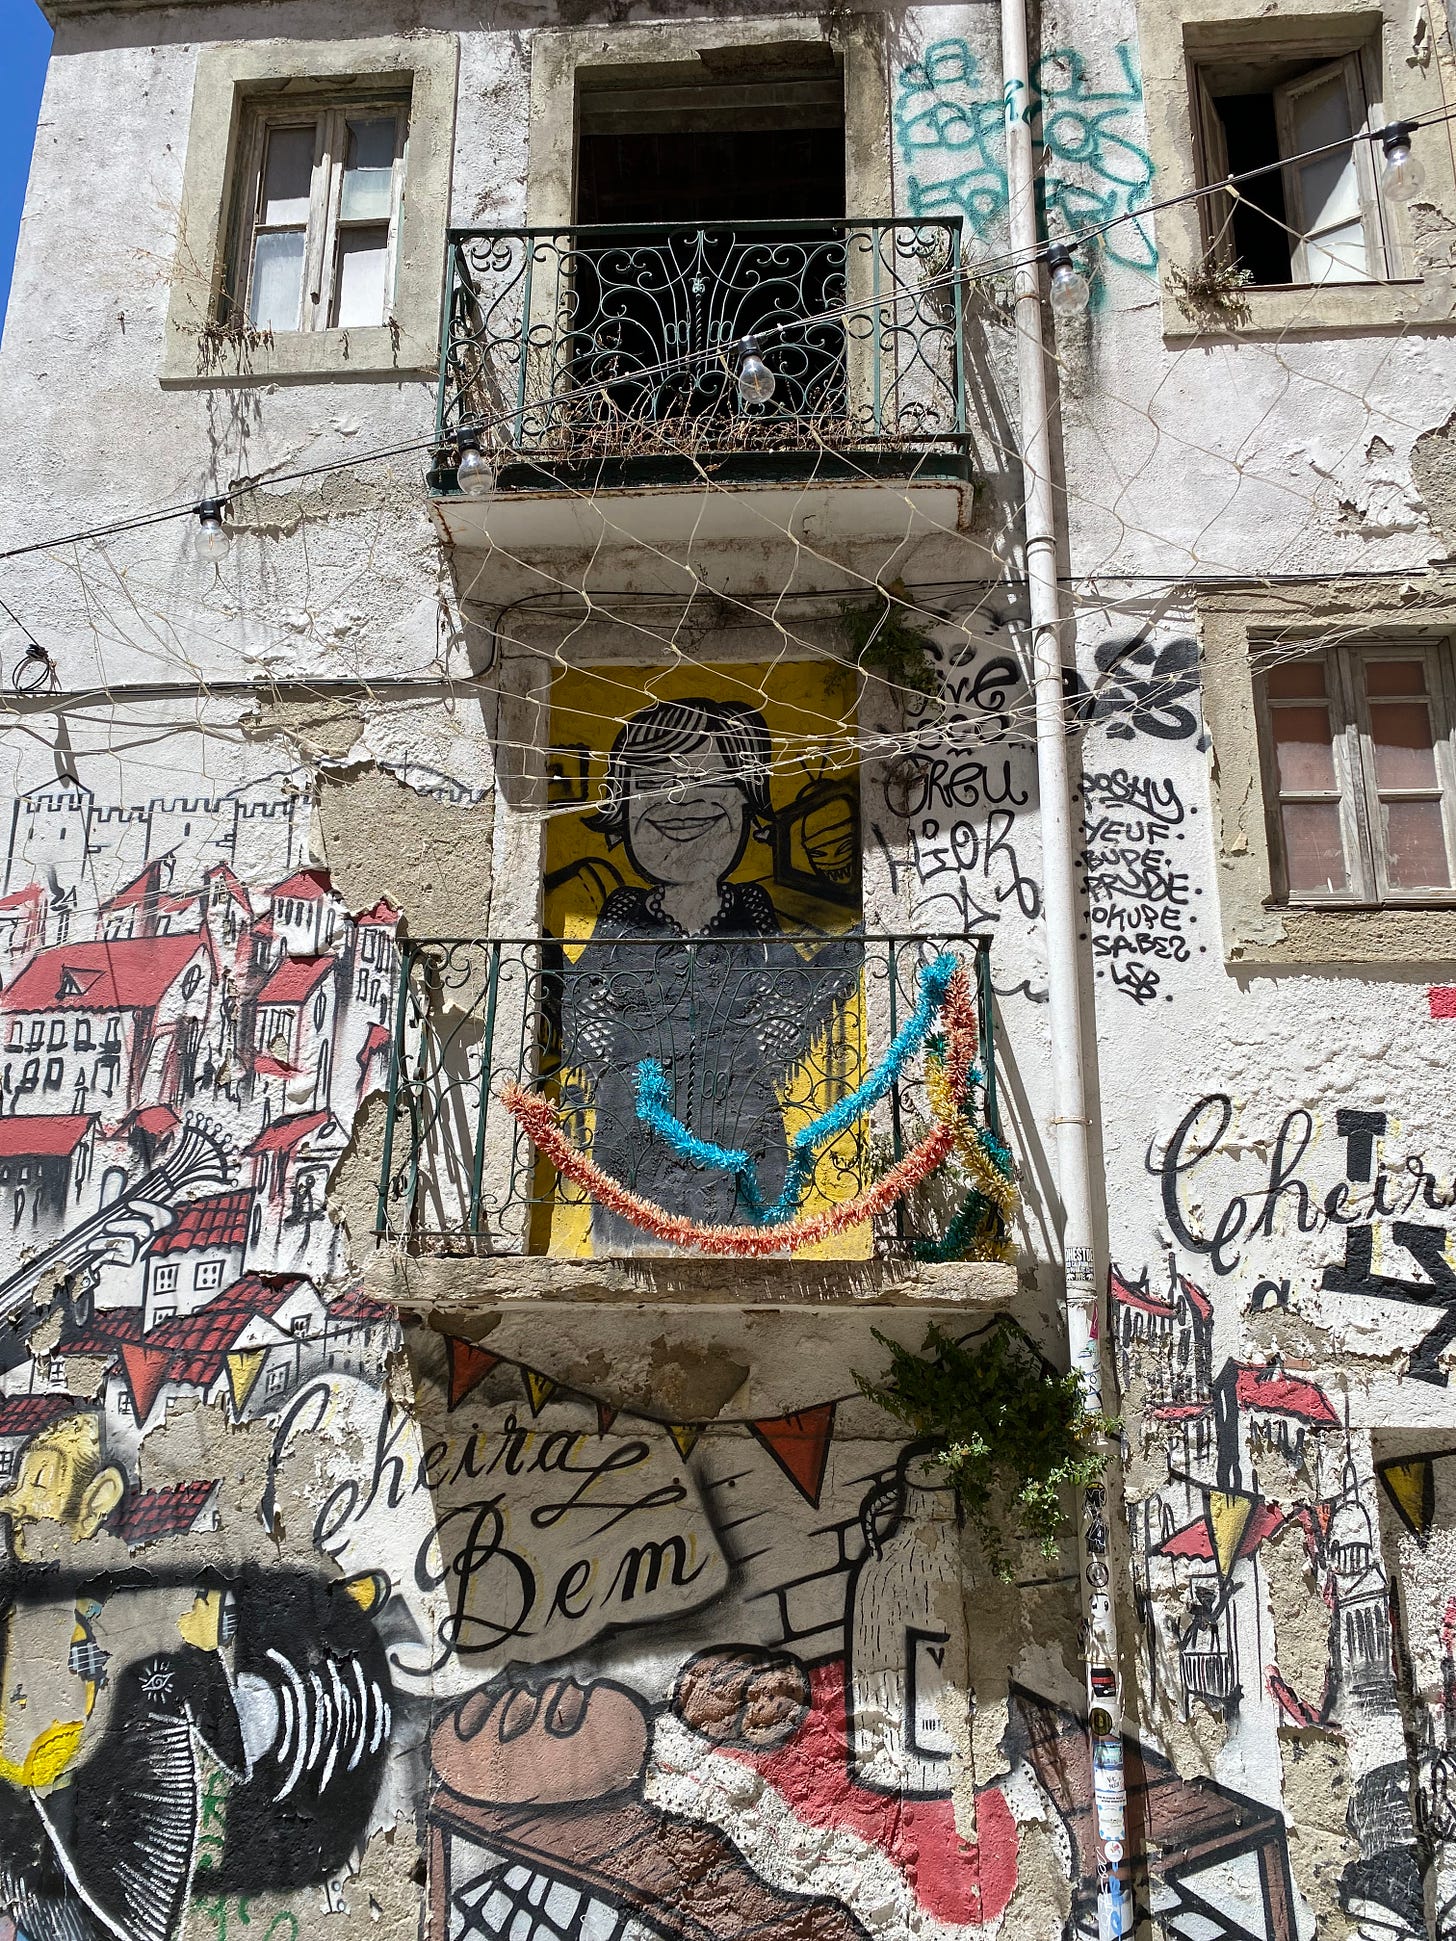 Graffiti on a building in Lisbon